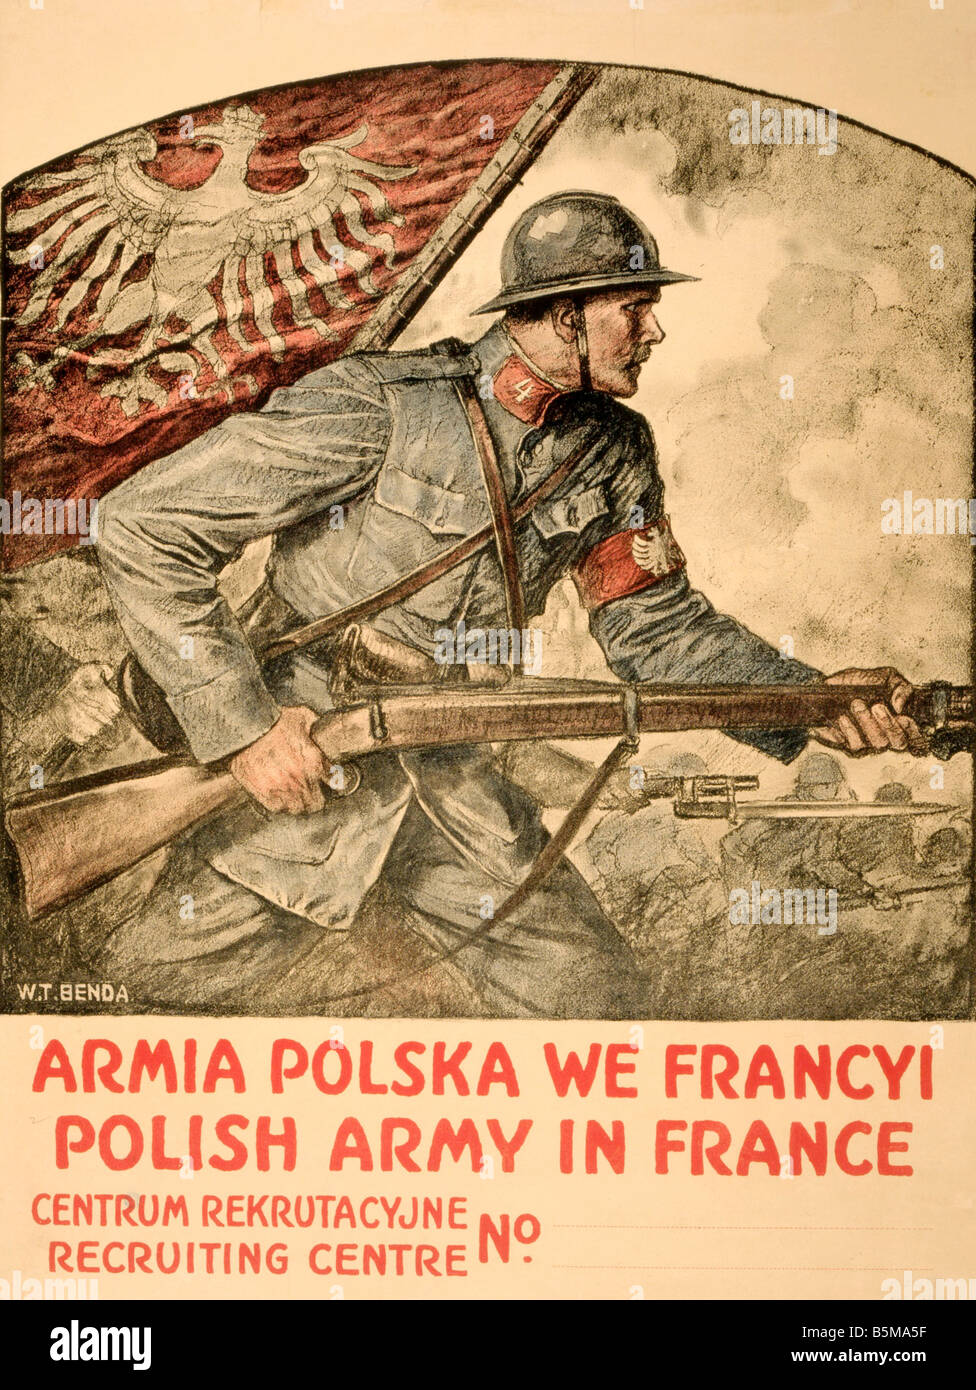 2 G55 P1 1917 64 WW I USA afiche de reclutamiento 1917 Historia de la I Guerra Mundial Propaganda Francyi Armia Polska tenemos ejército polaco en Francia pr Foto de stock